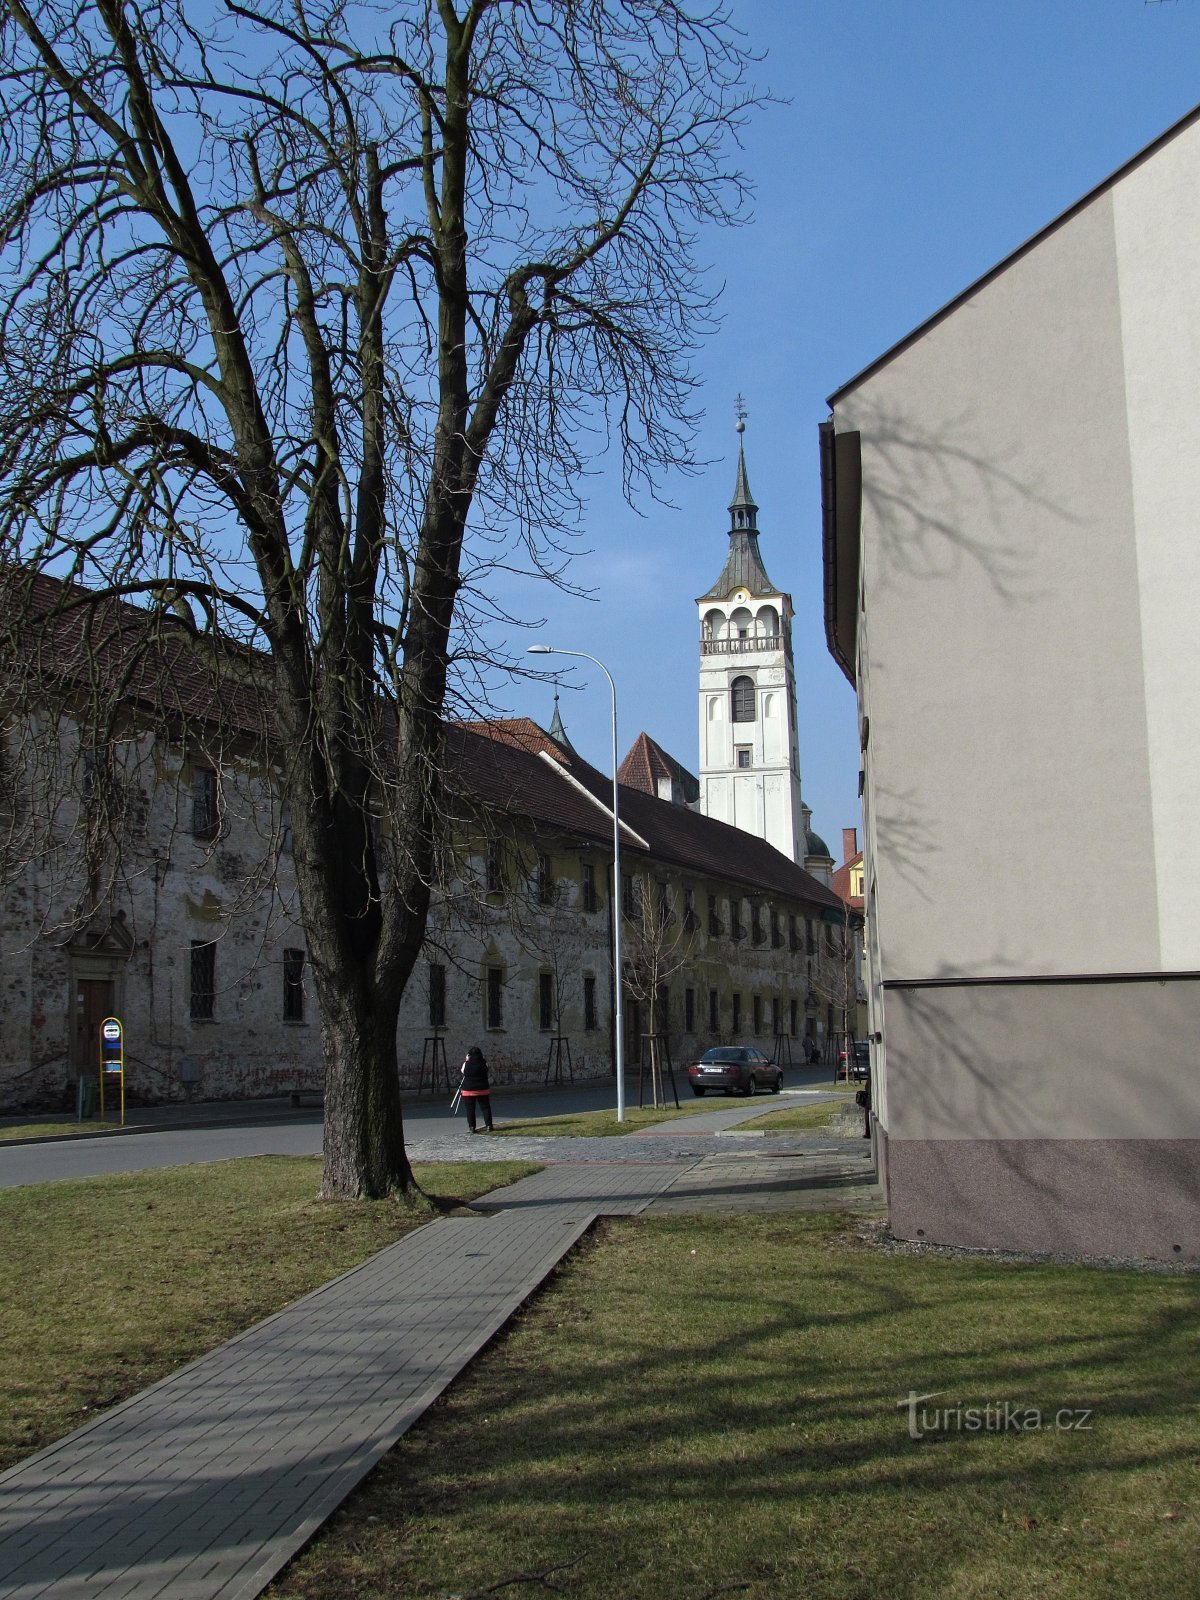 Lipník nad Bečvou - the church of St. Francis Serafinský and the former Piarist college